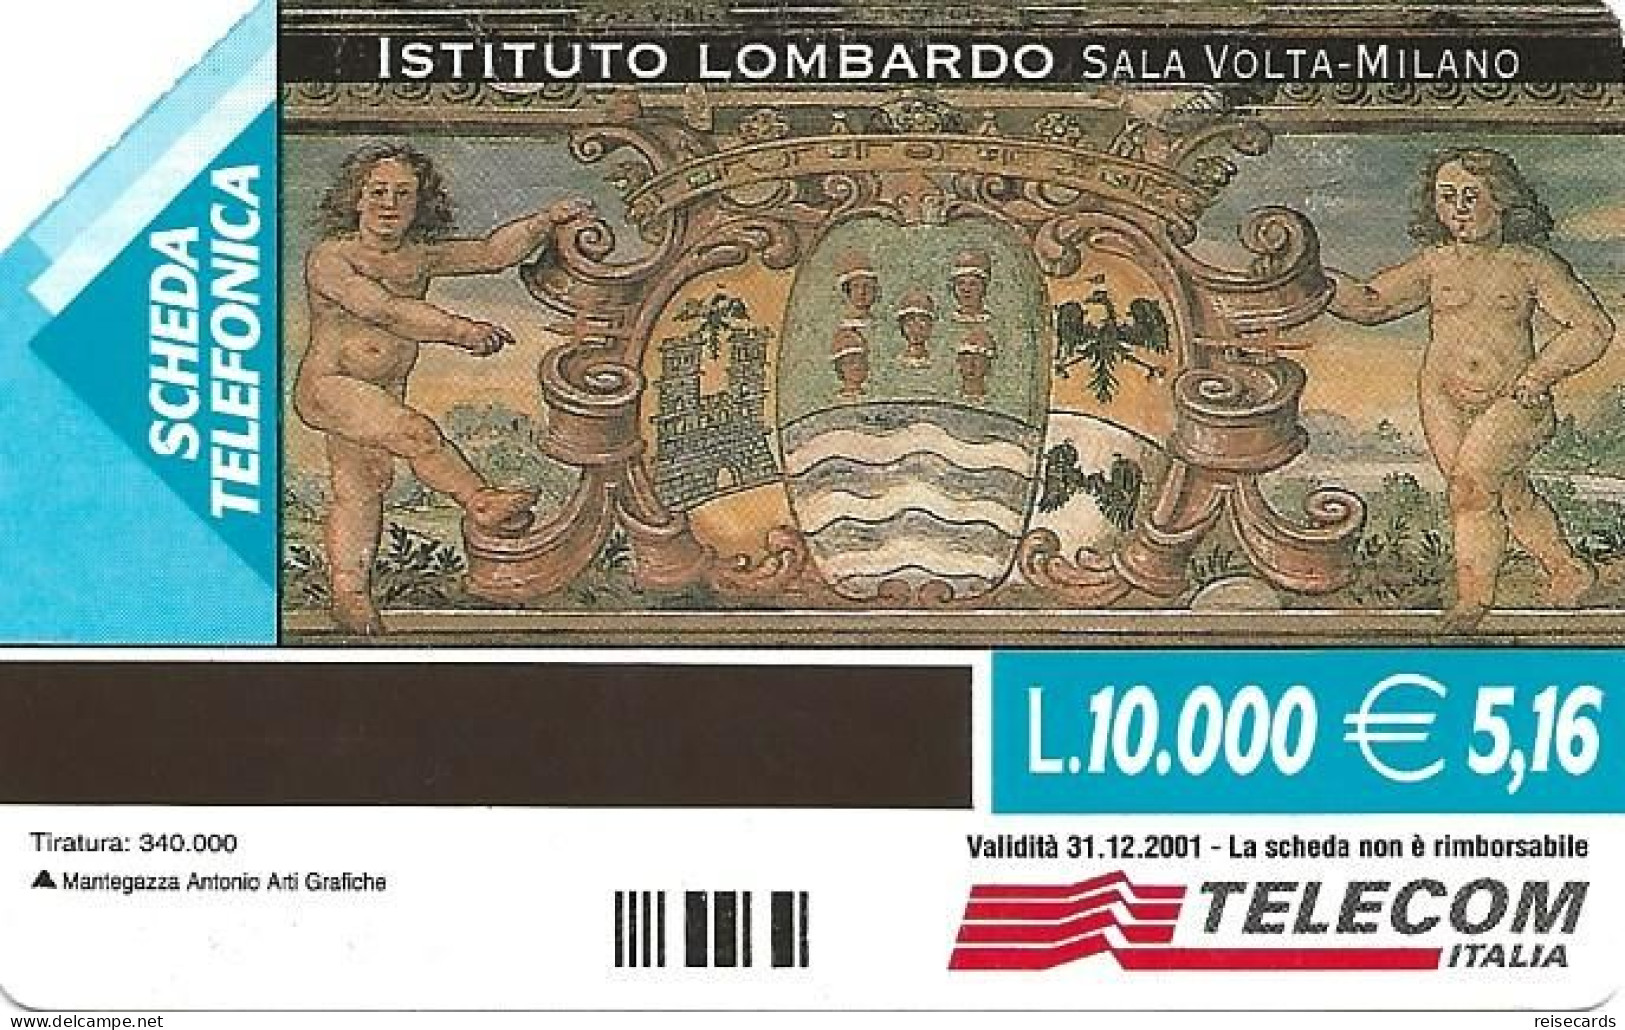 Italy: Telecom Italia - Istituto Lombardo, Particolare Del Monoscritto Di Volta - Públicas  Publicitarias